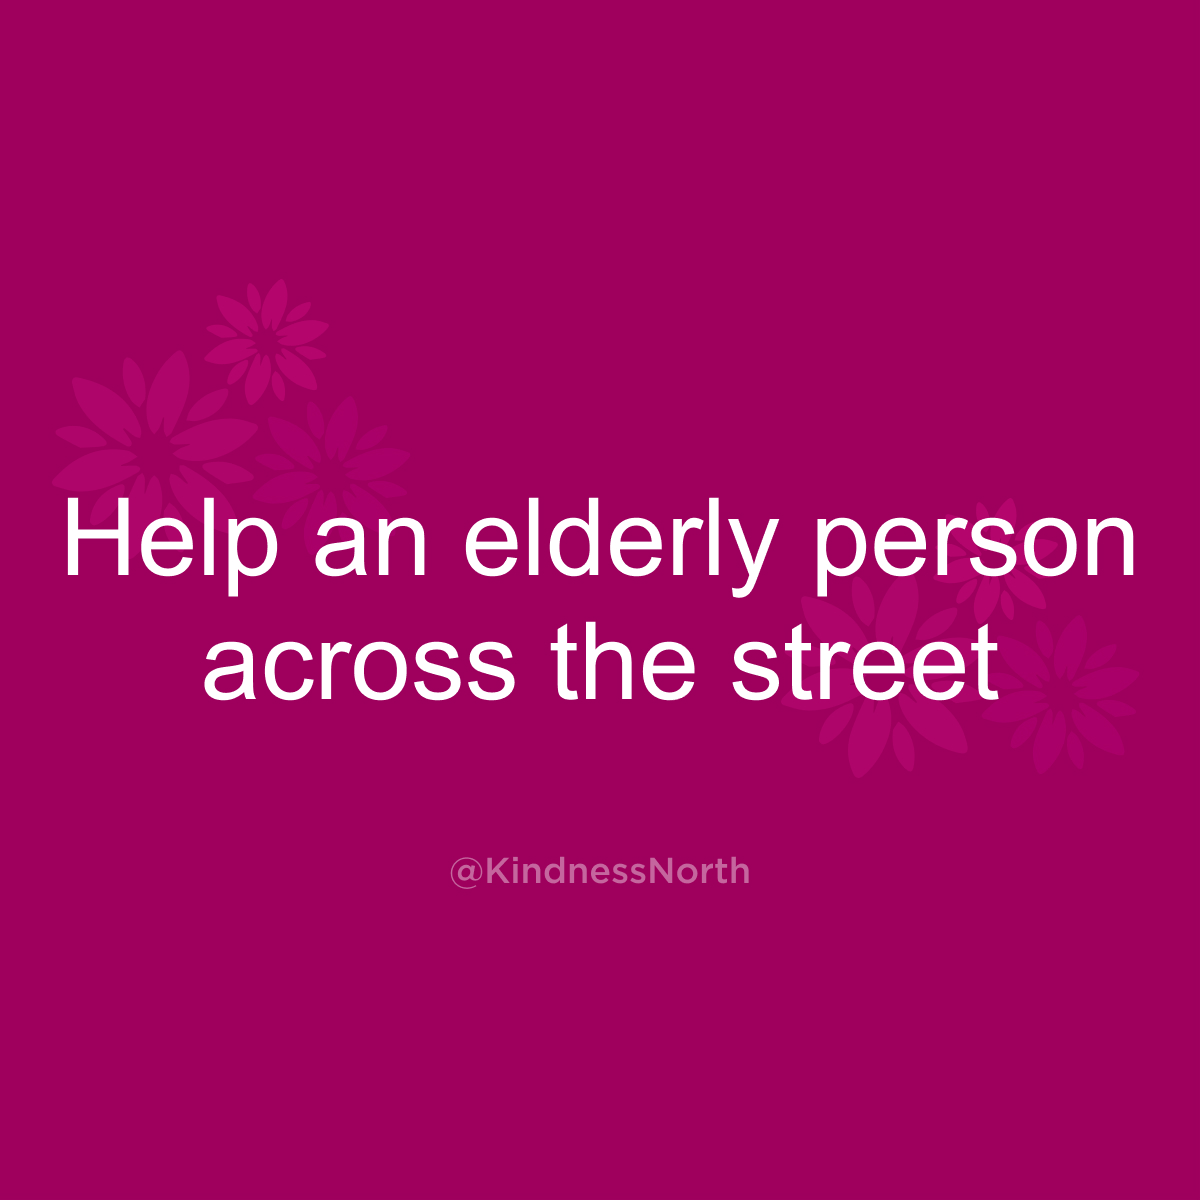 Help an elderly person across the street